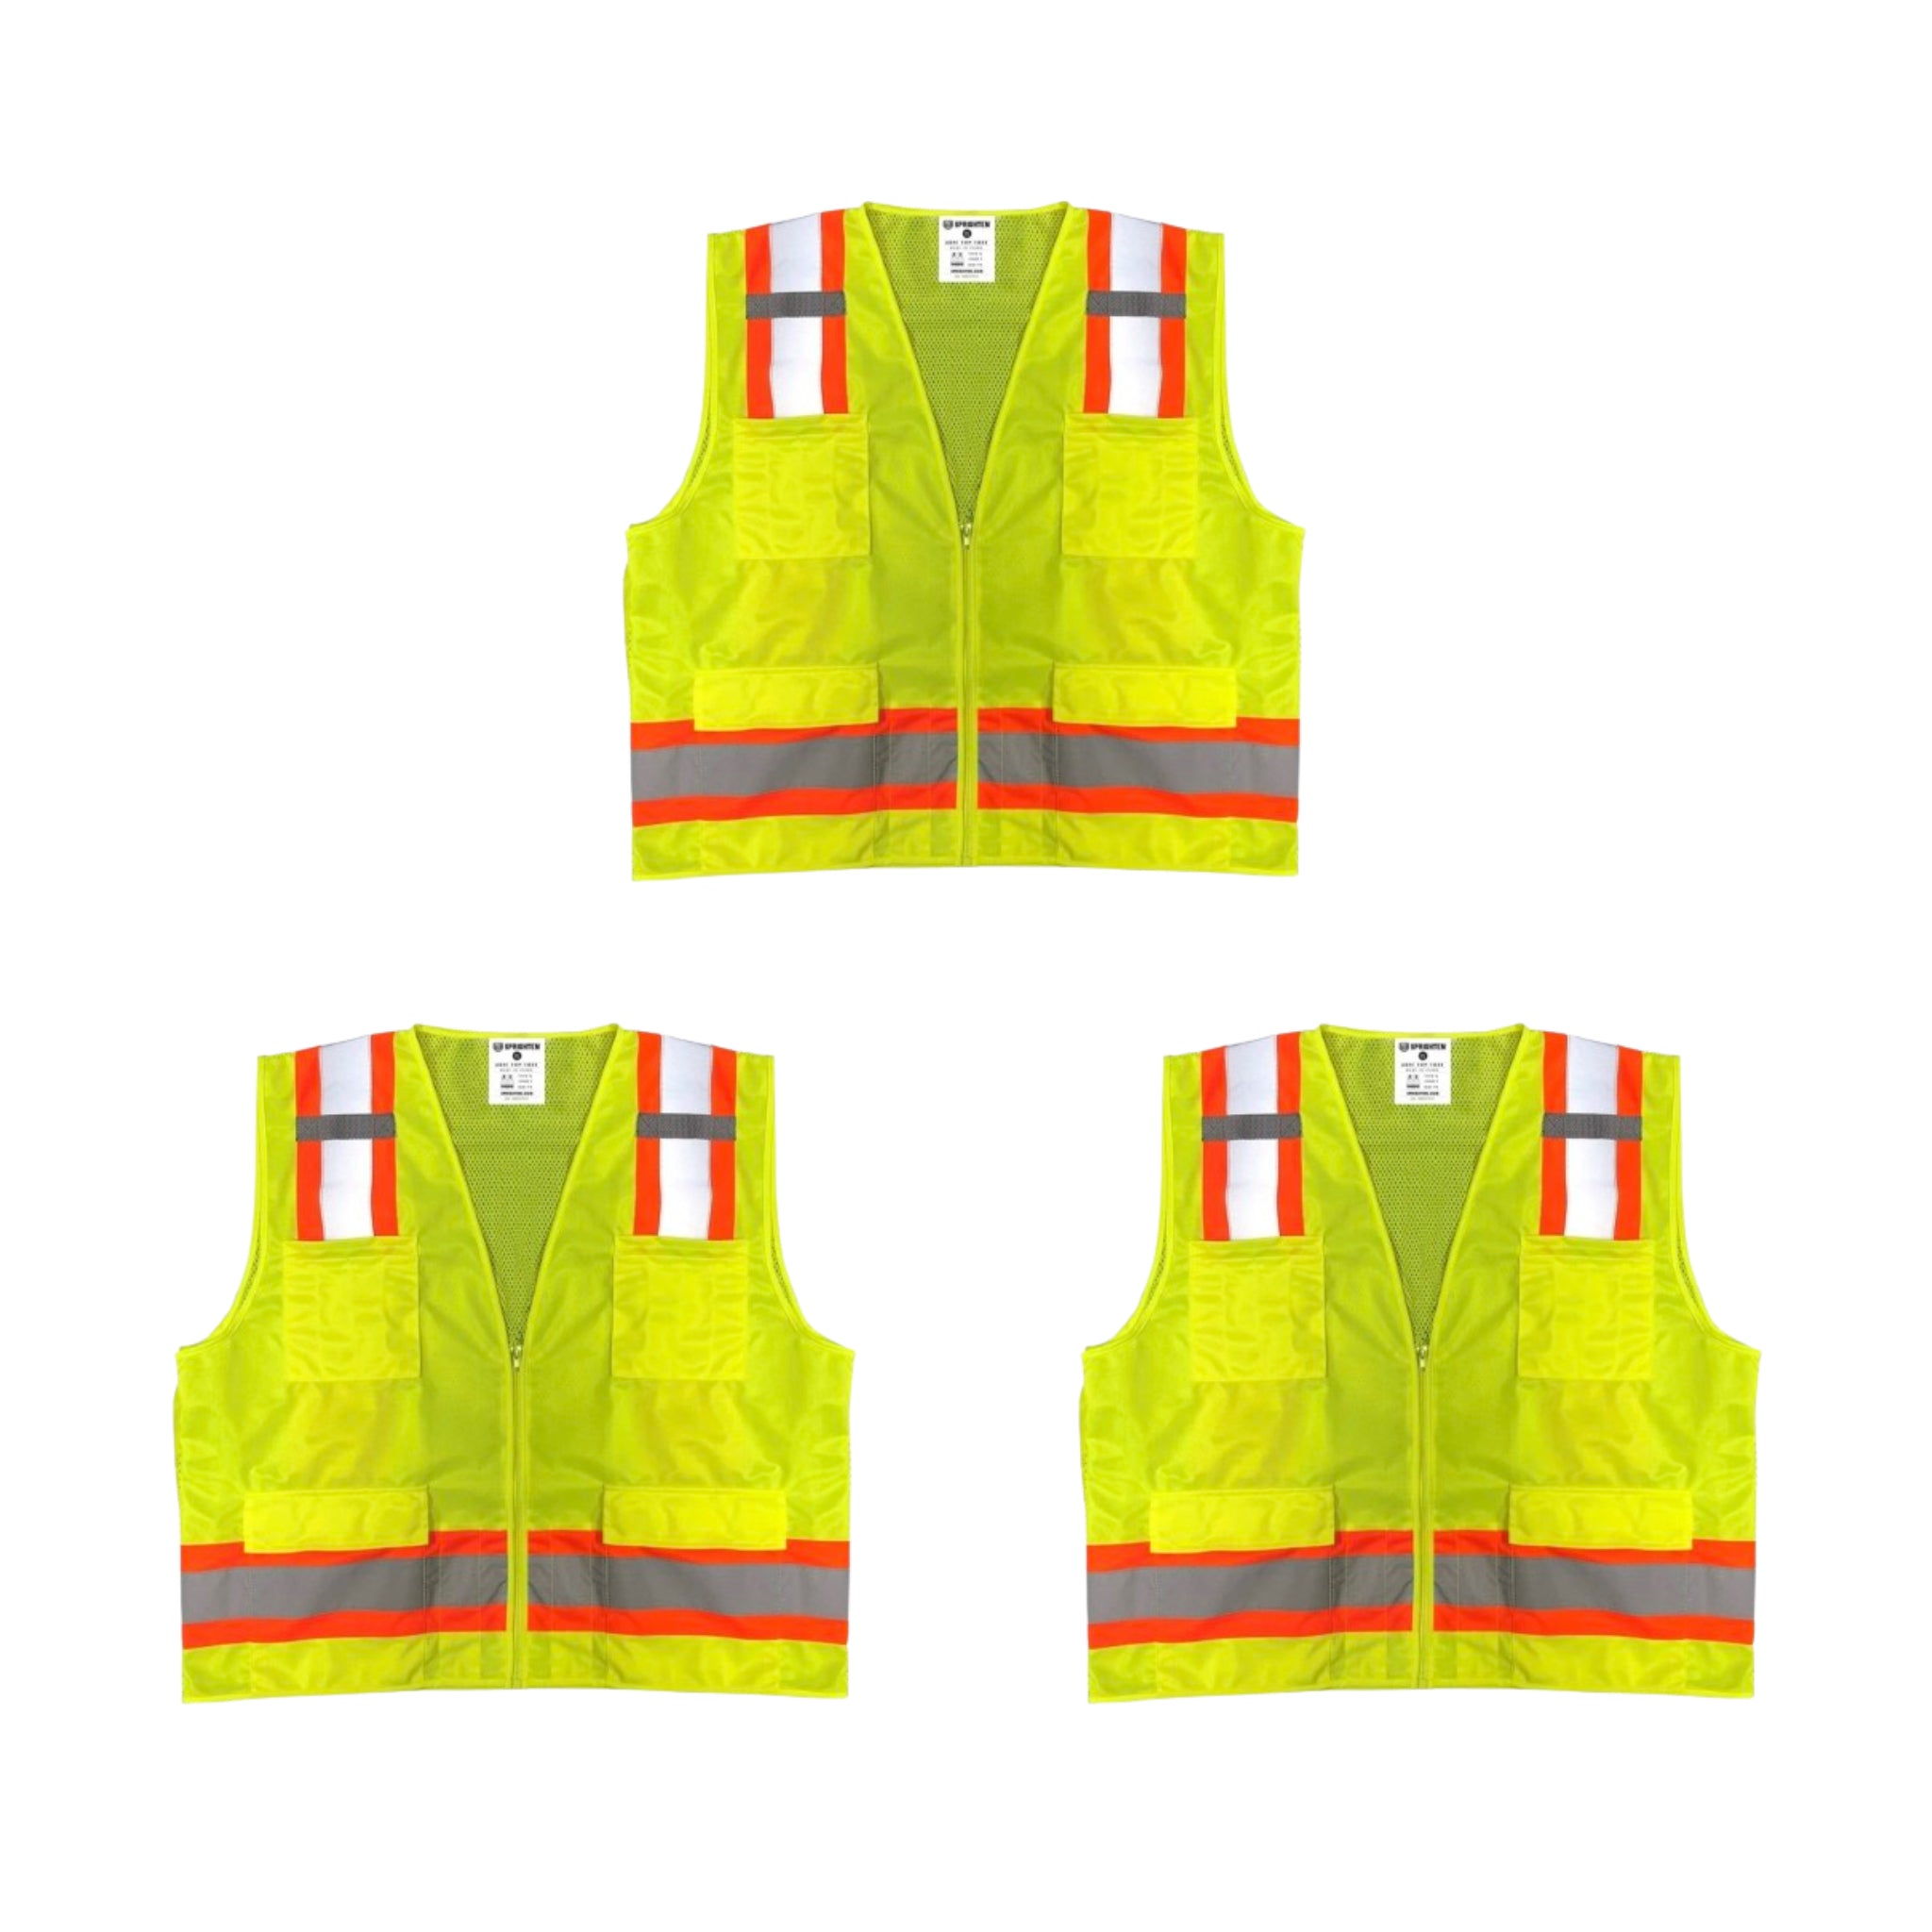 Safety Main 05TTSYZ Surveyor Vest, Class 2, Solid Front, Mesh Back, Hi-Vis Yellow, Pack of 3